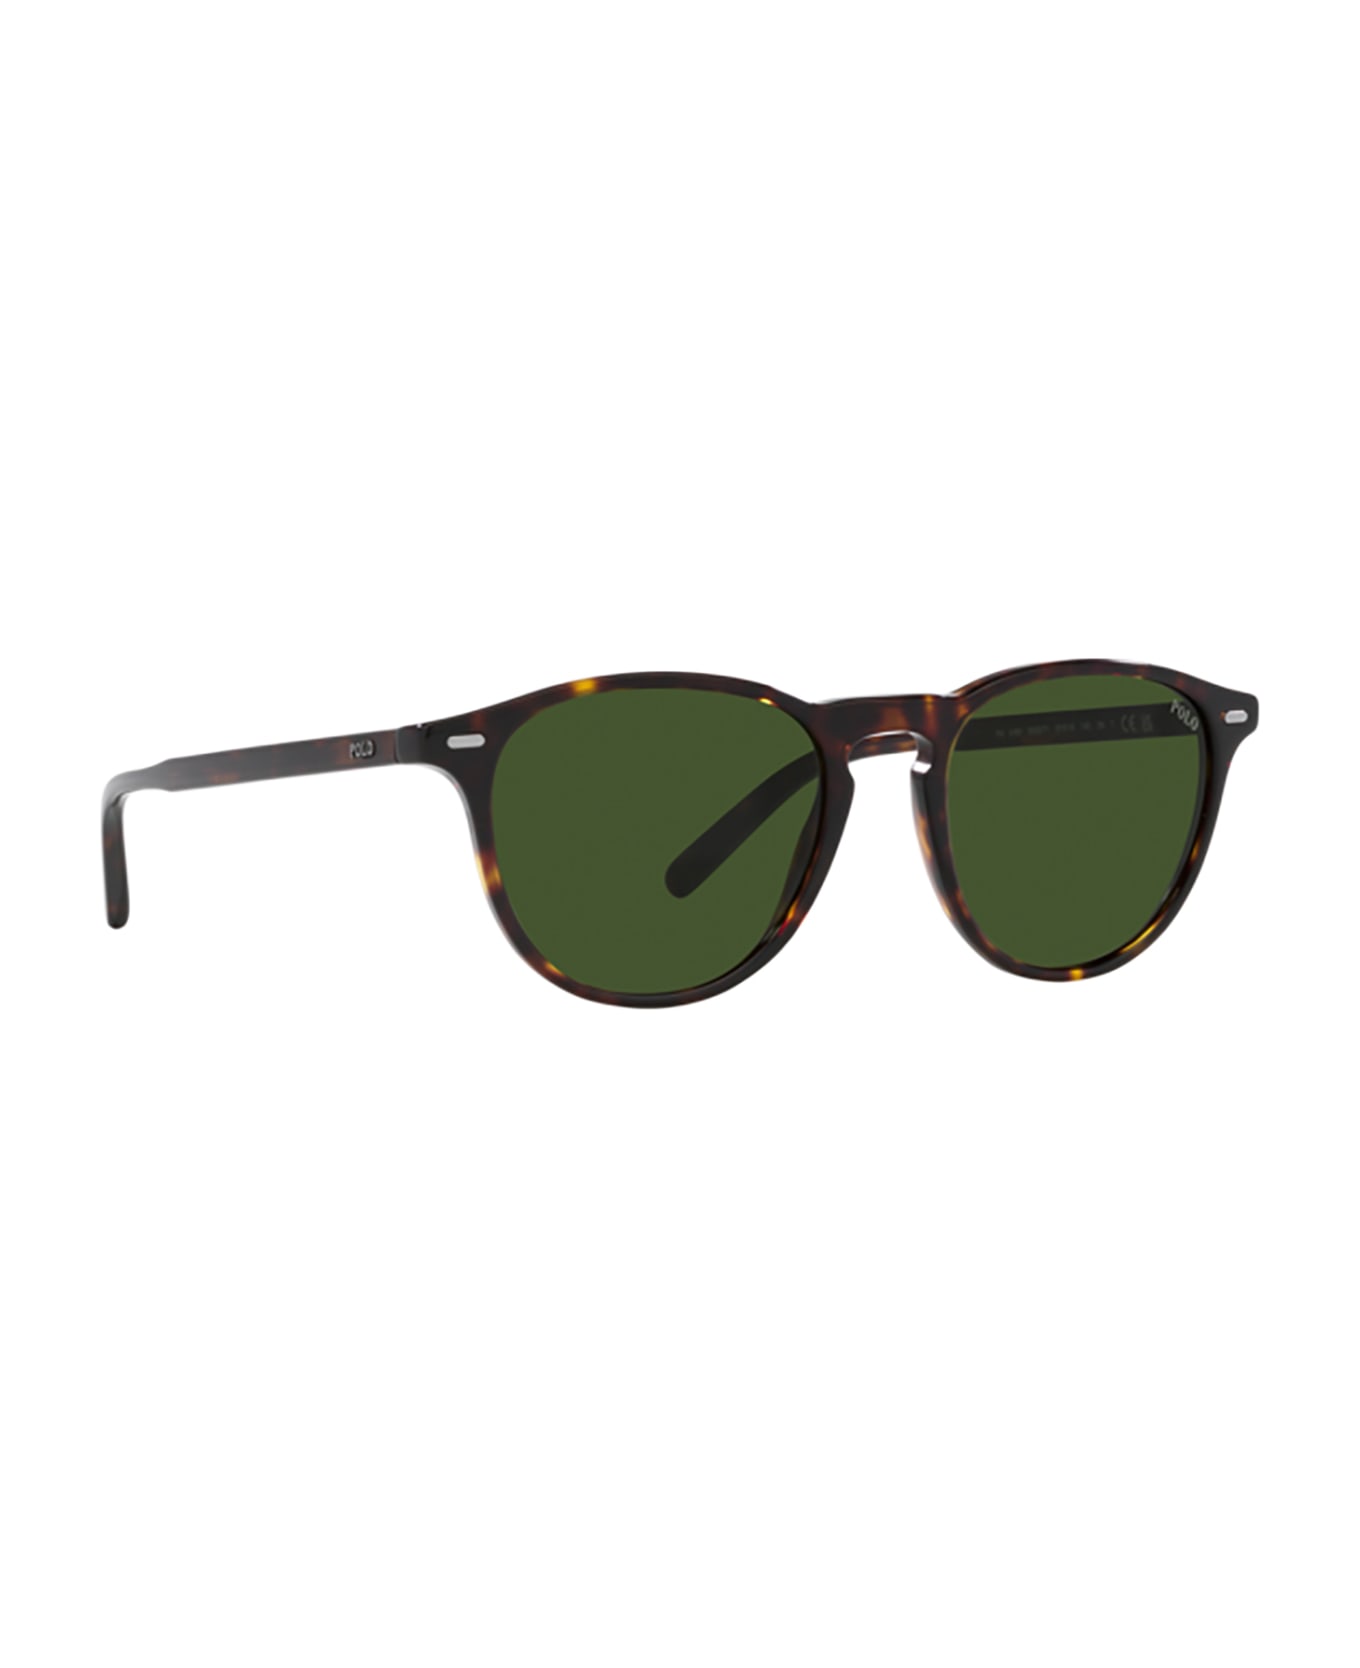 Polo Ralph Lauren Ph4181 Shiny Dark Havana Sunglasses - Shiny dark havana